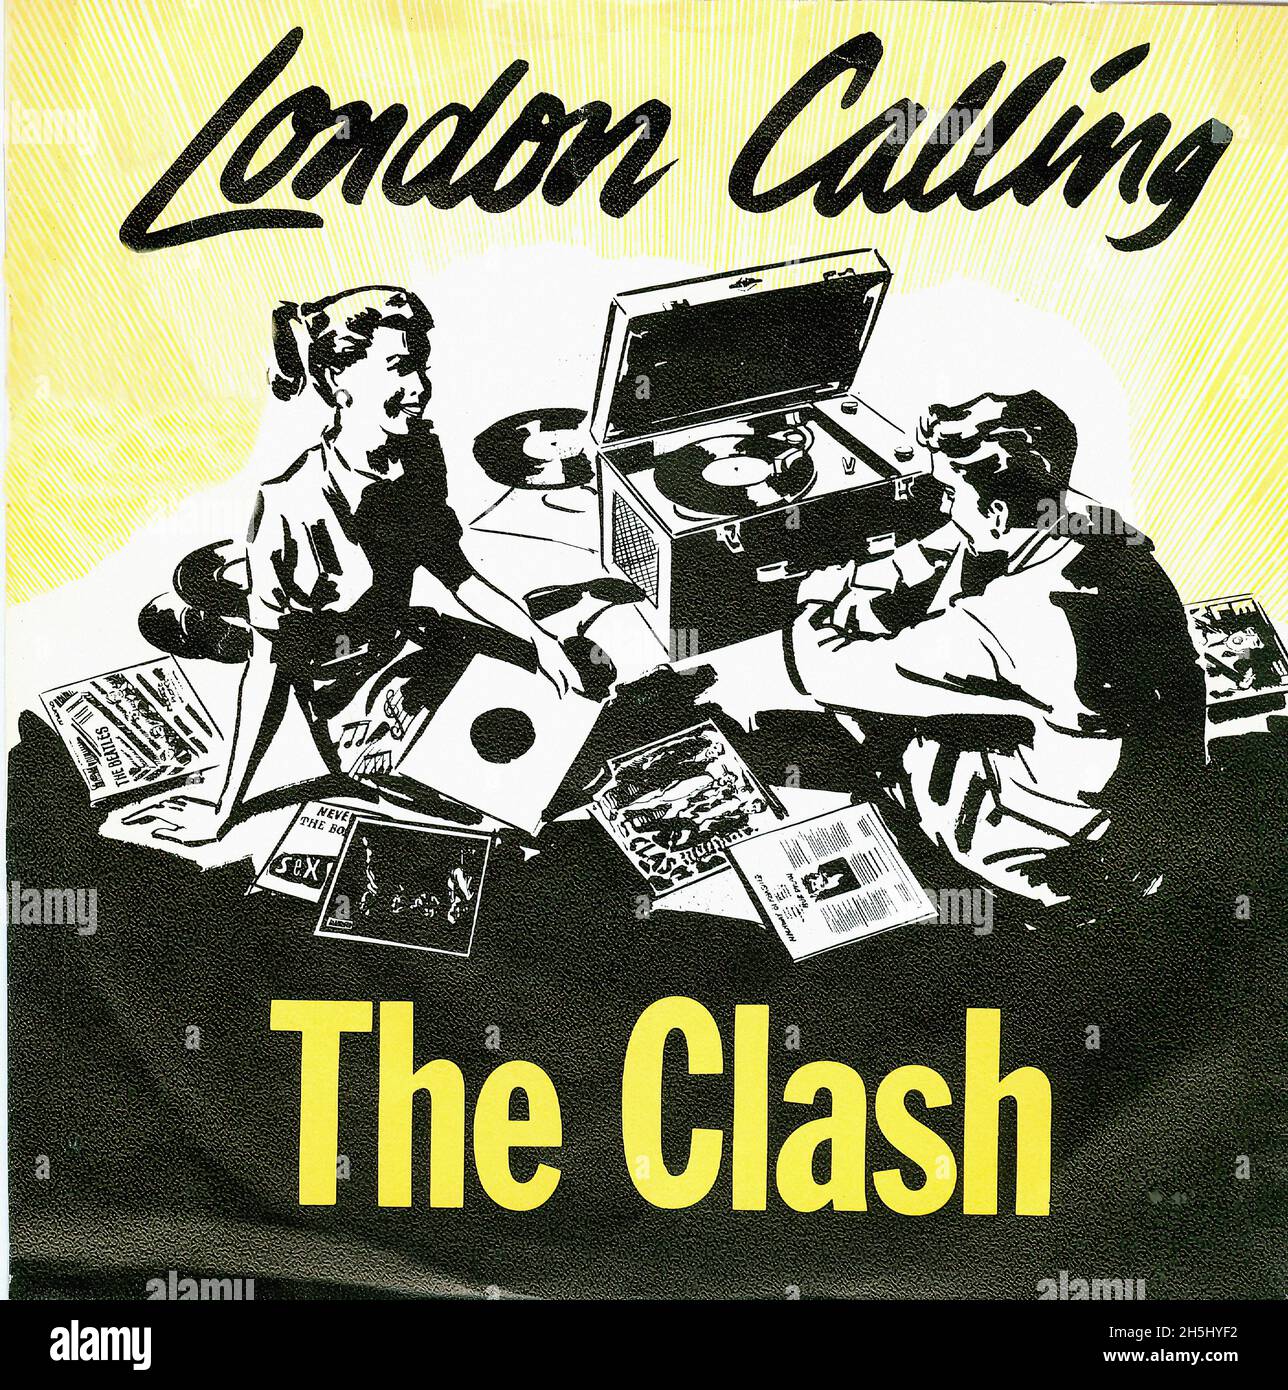 Copertina singola vintage - Clash, The - London Calling - UK - 1979 Foto  stock - Alamy